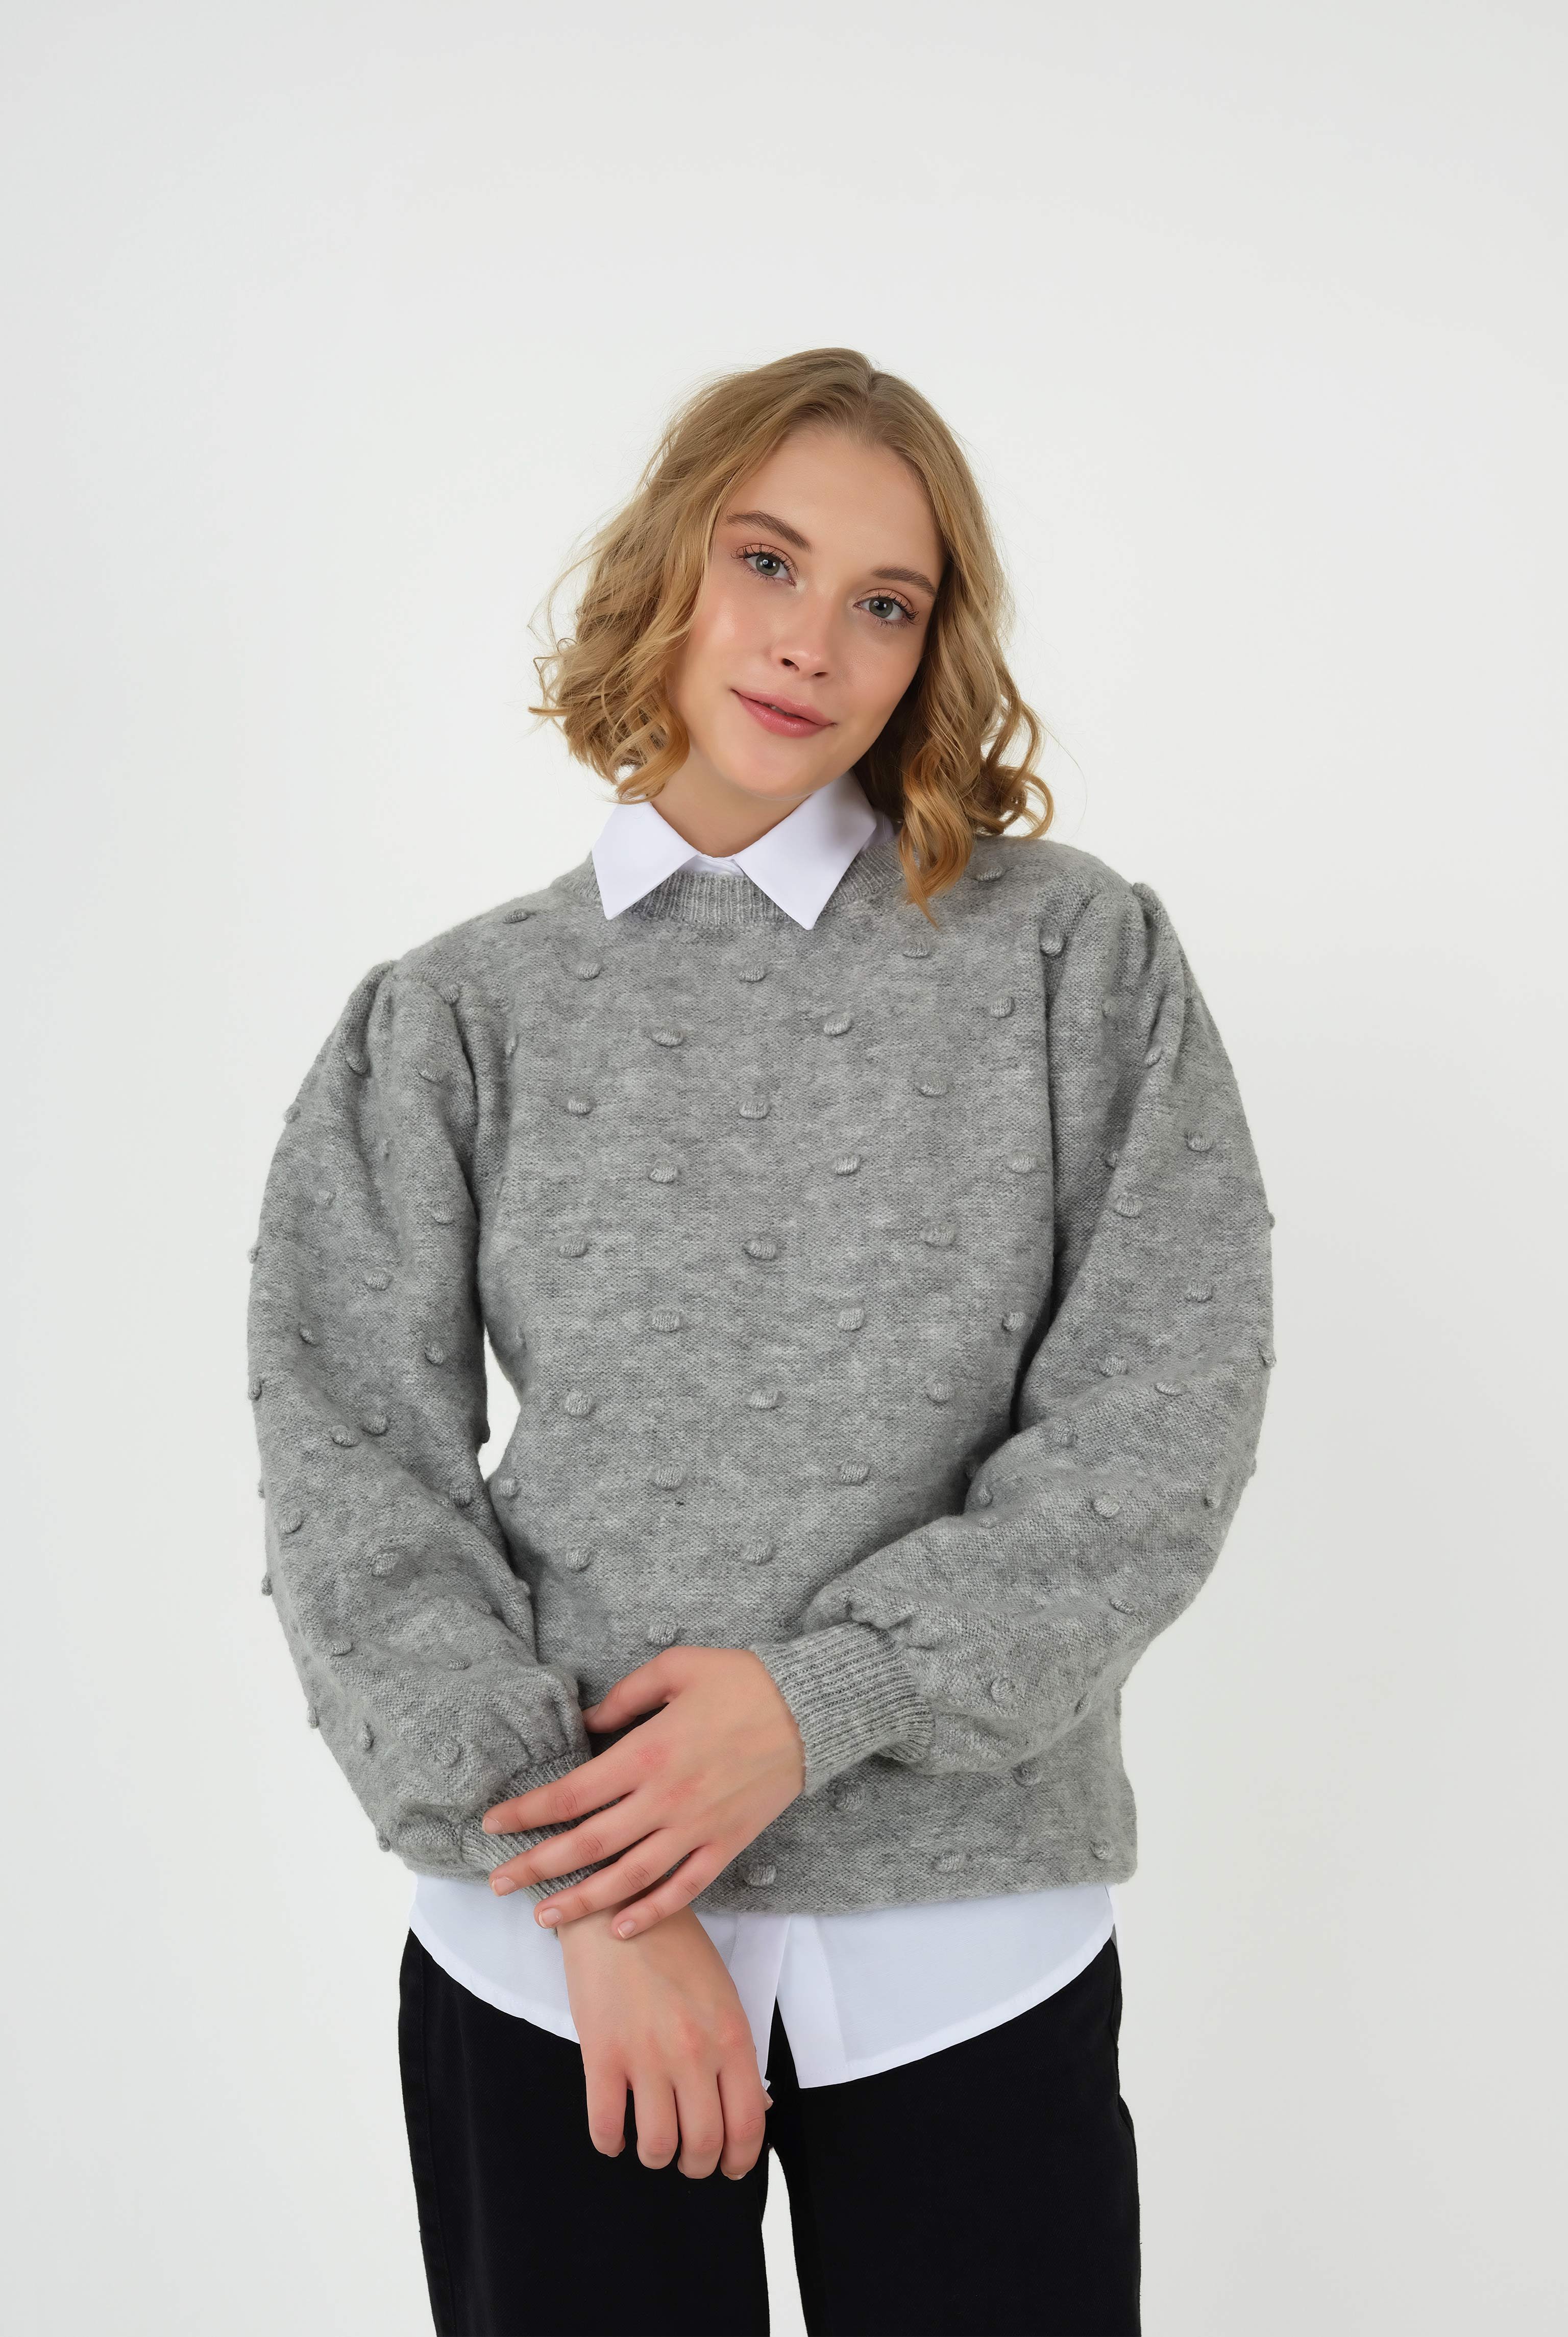 Chickpeas Sweater Gray 